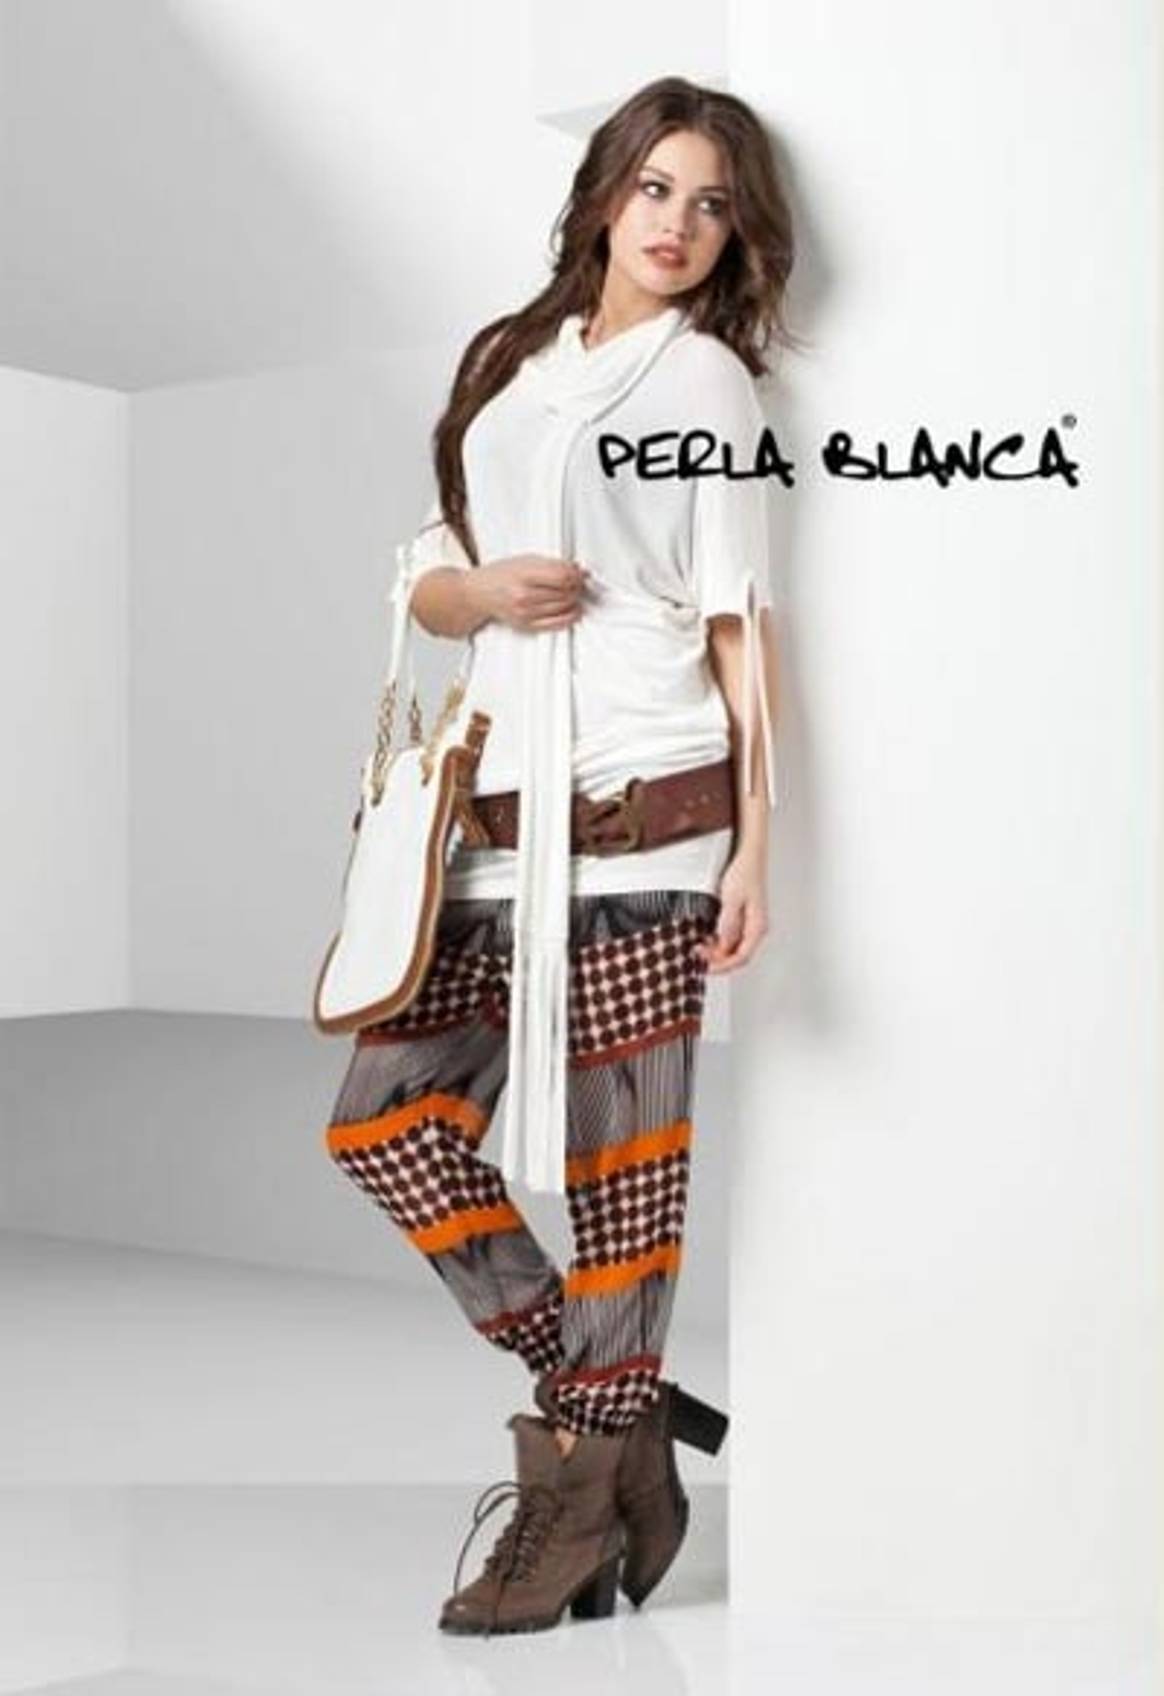 Moda fair: new exhibitors to know about - Perla Blanca